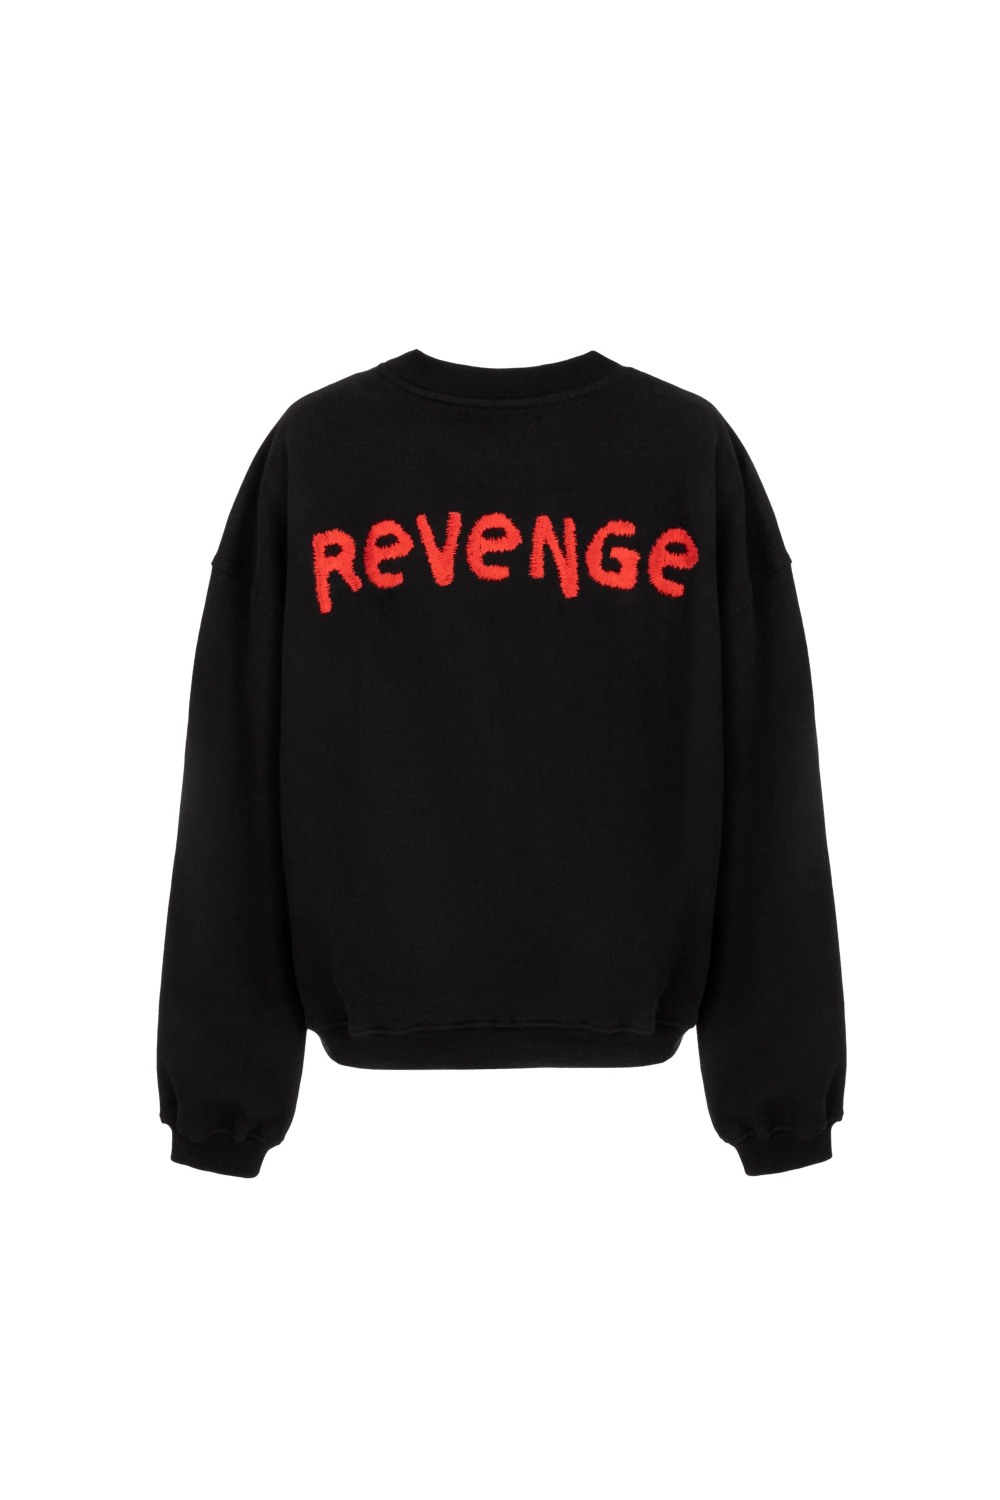 sweatshirt "revenge"  in black color